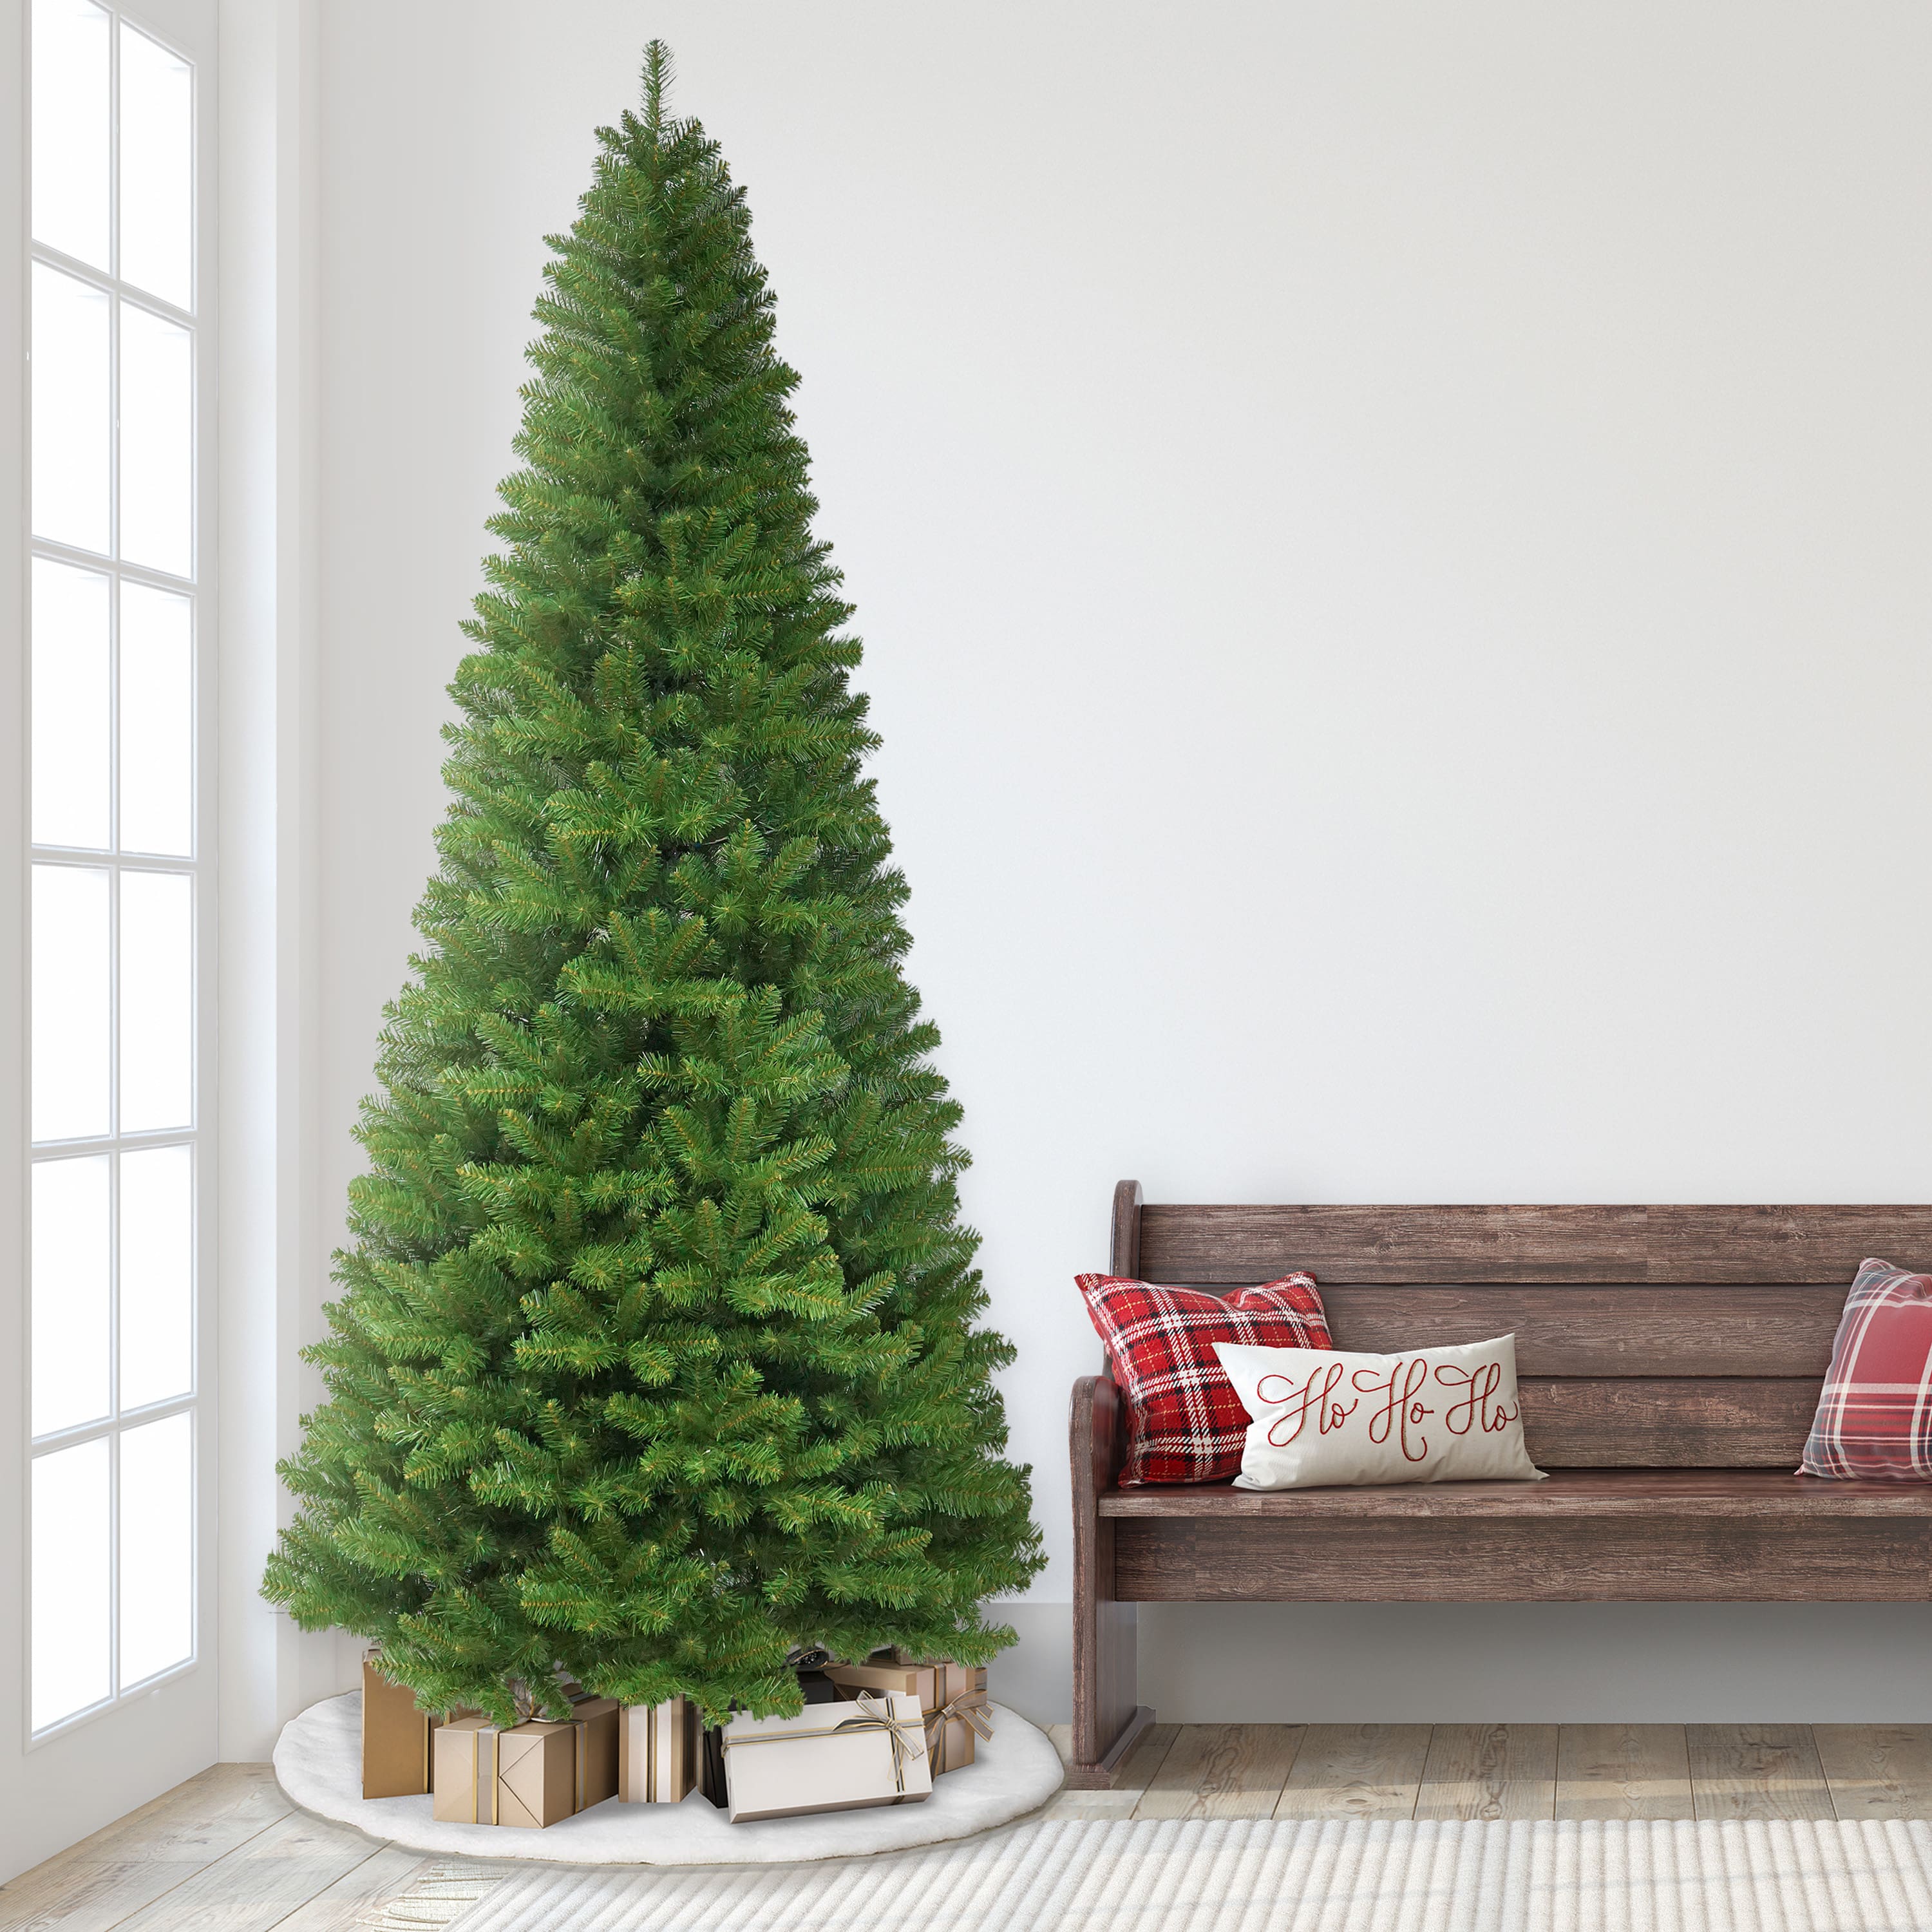 9ft. Unlit Virginia Pine Artificial Christmas Tree